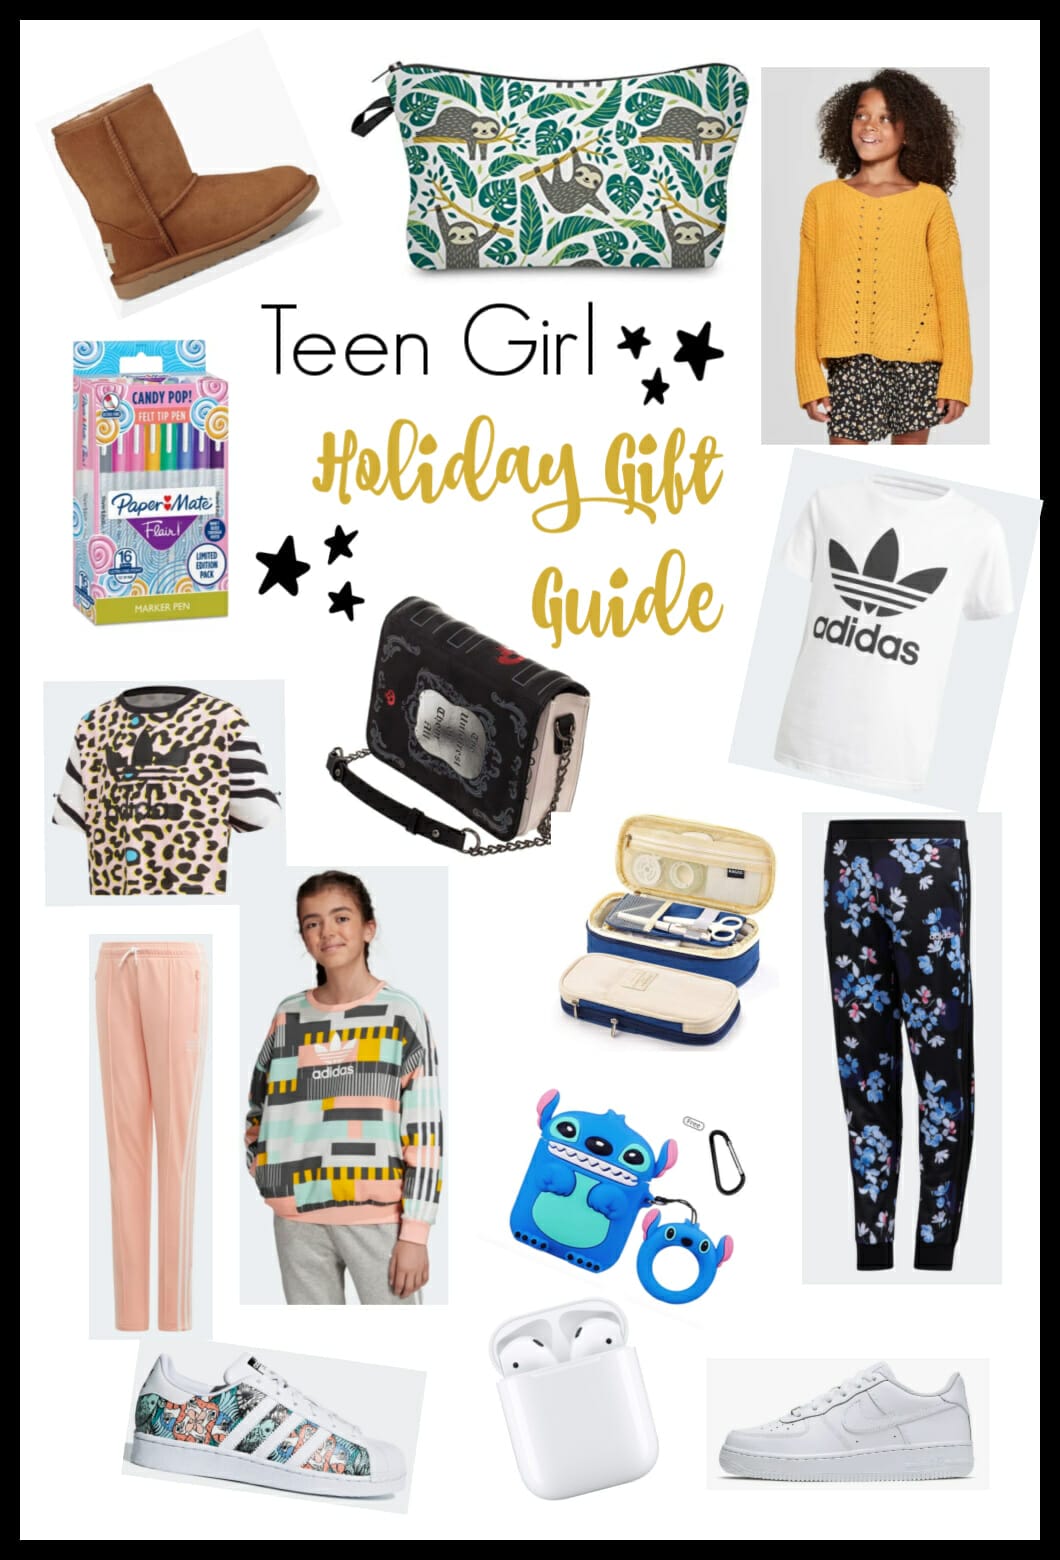 https://eyqutuda73b.exactdn.com/wp-content/uploads/2019/11/Teen-Girl-Holiday-Gift-Guide.jpg